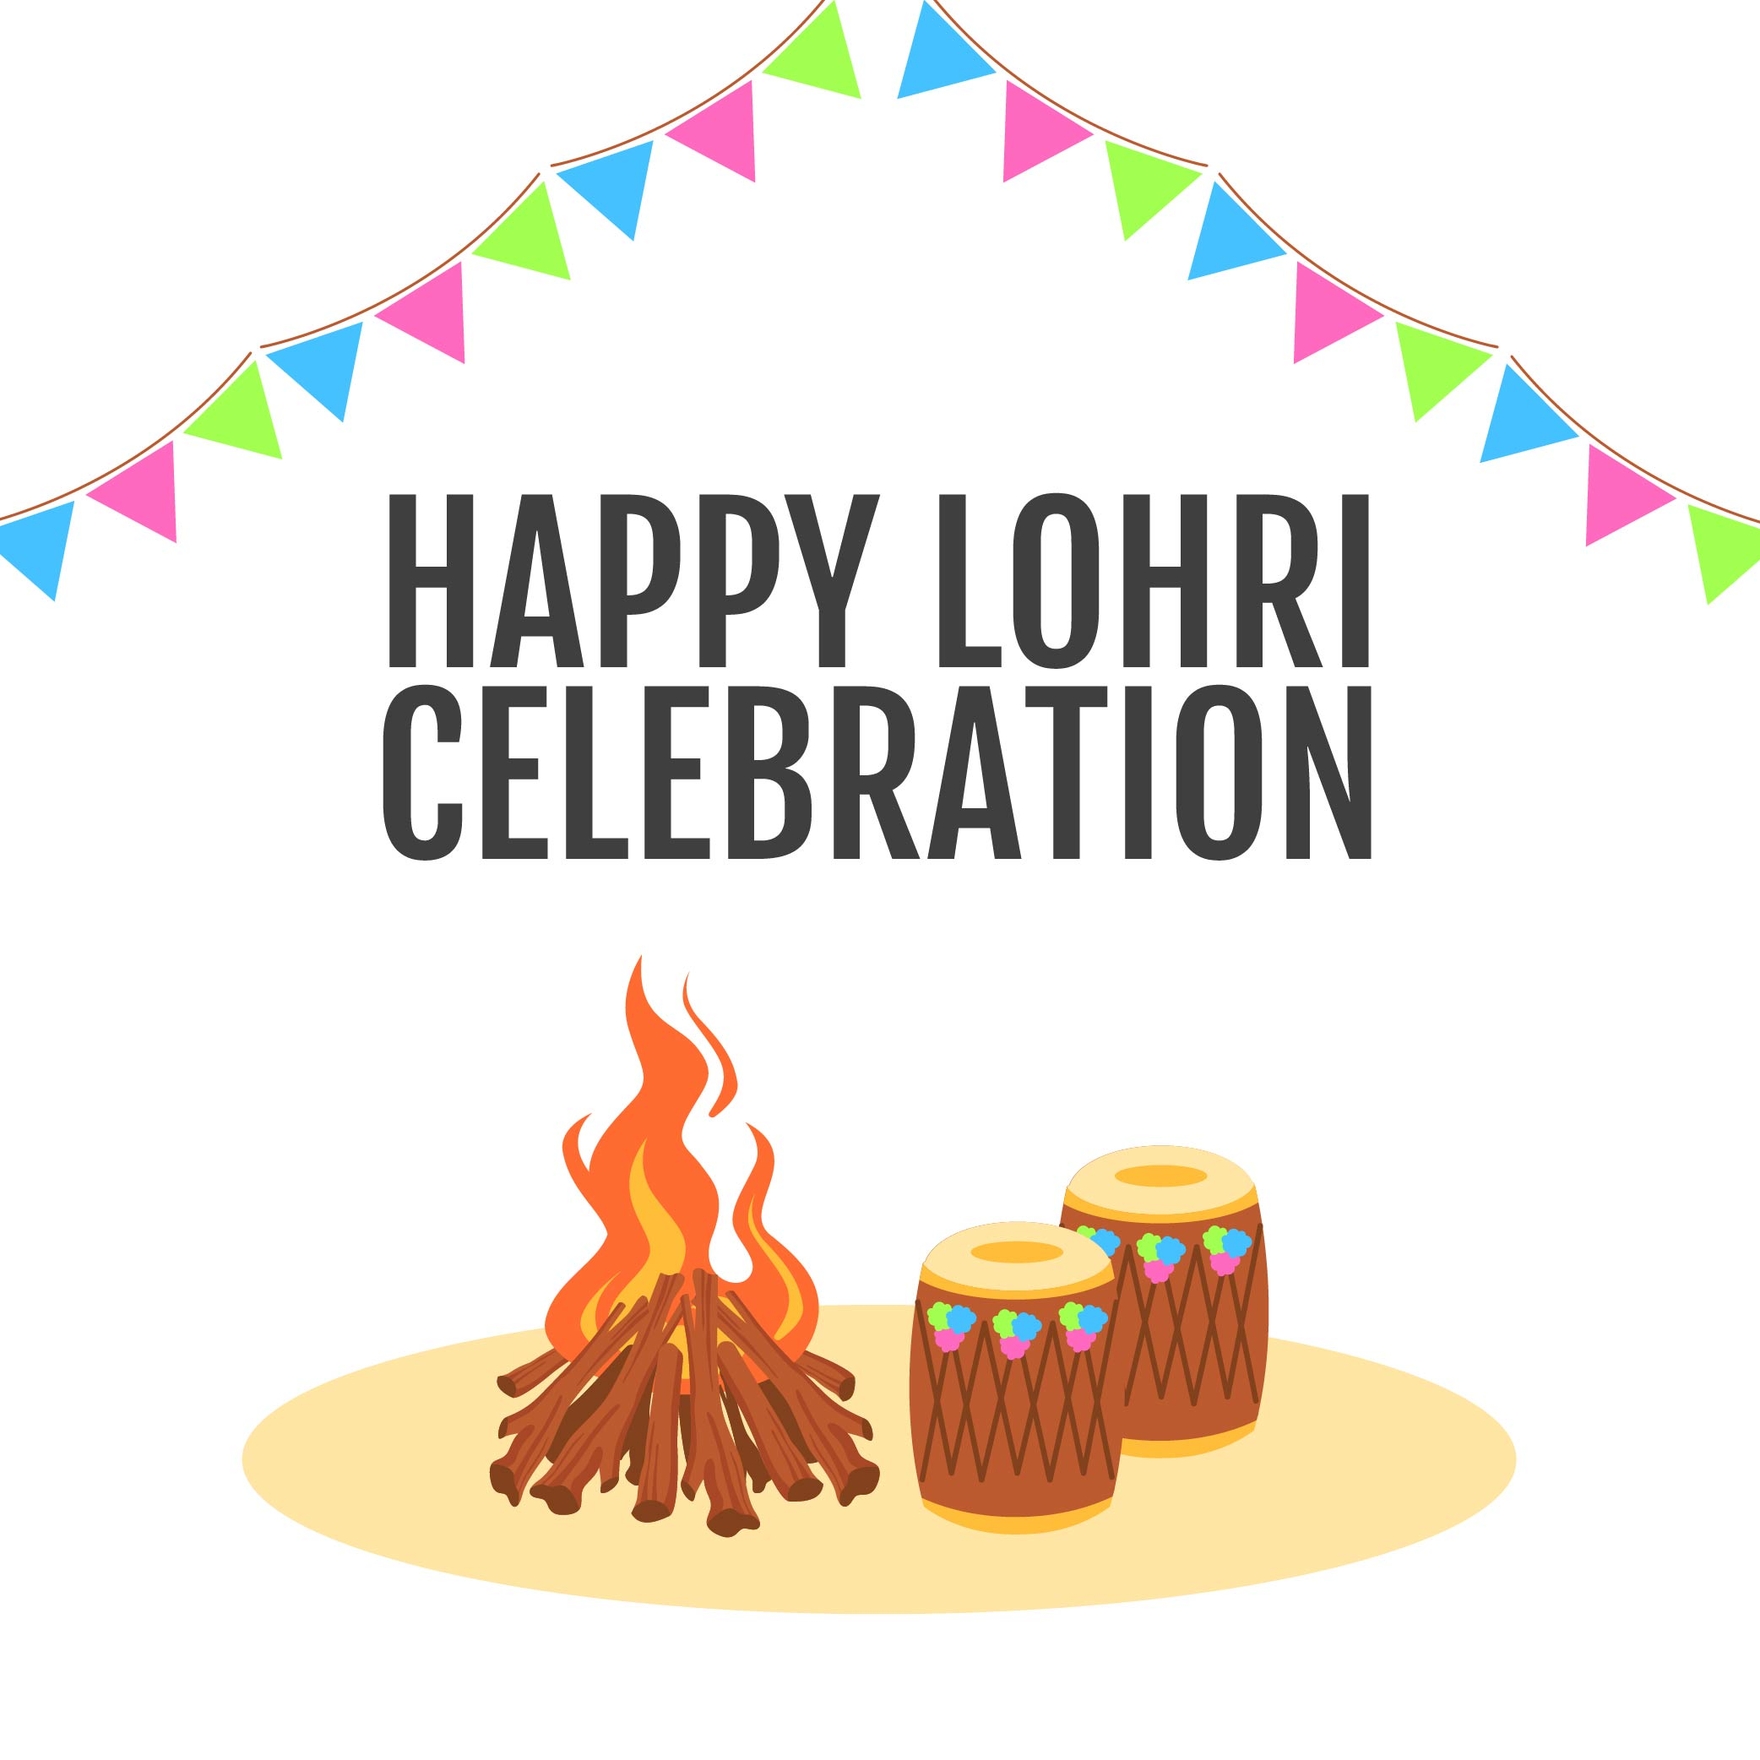 Free Lohri Celebration Vector in Illustrator, PSD, EPS, SVG, JPG, PNG